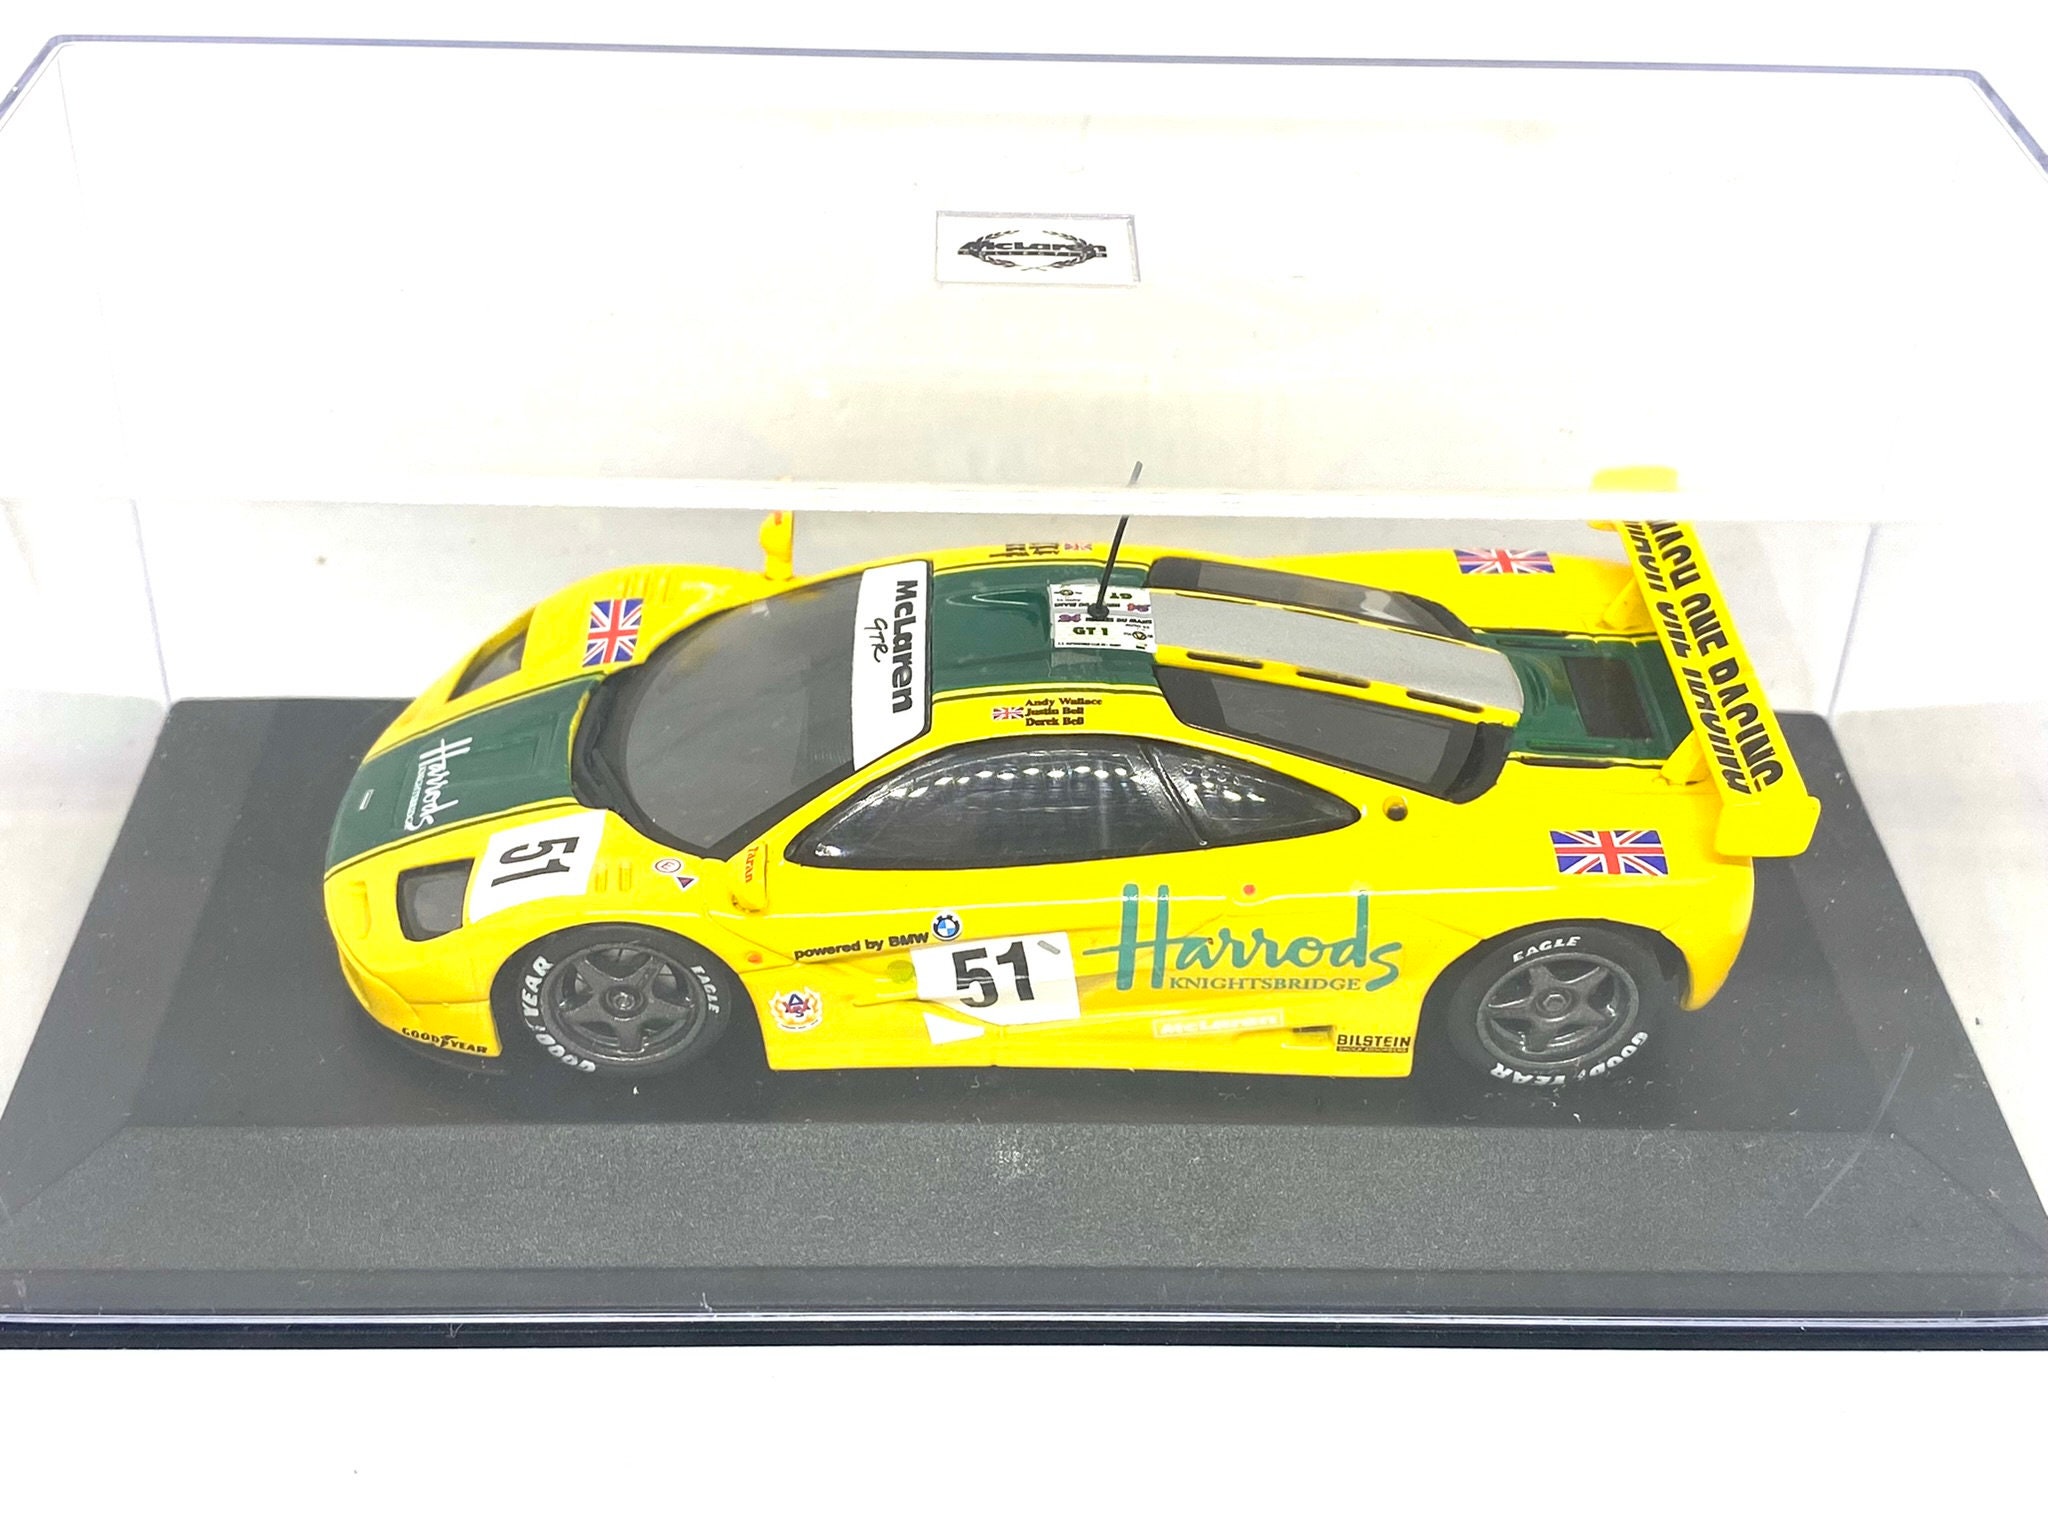 1:43 Scale Minichamps Model of a 1995 Mclaren F1 GTR Sports Car as